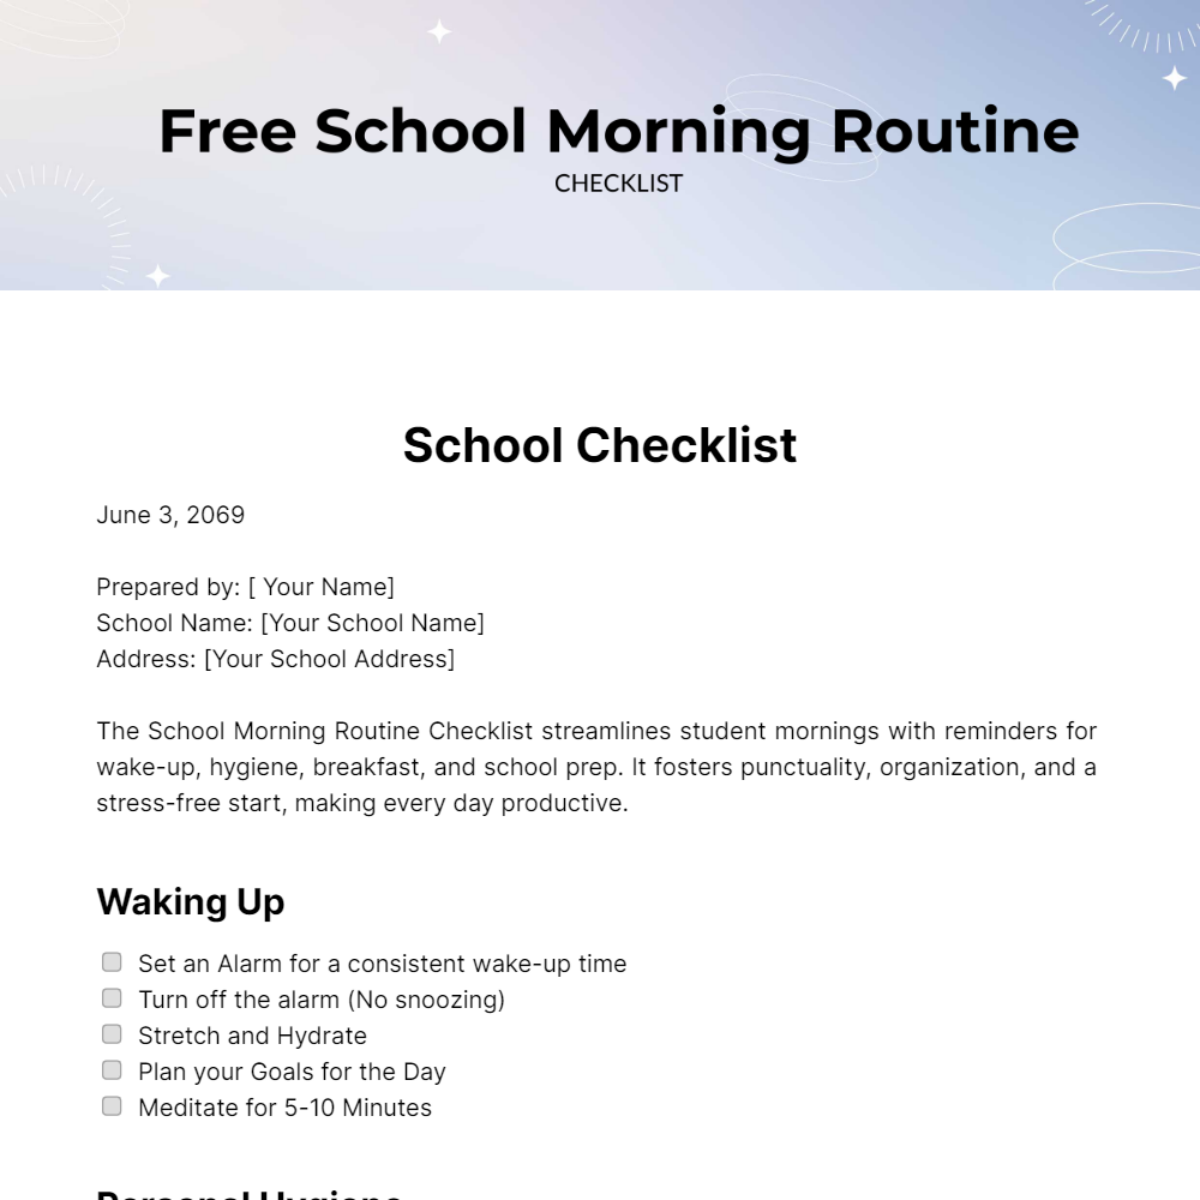 Free School Morning Routine Checklist Template